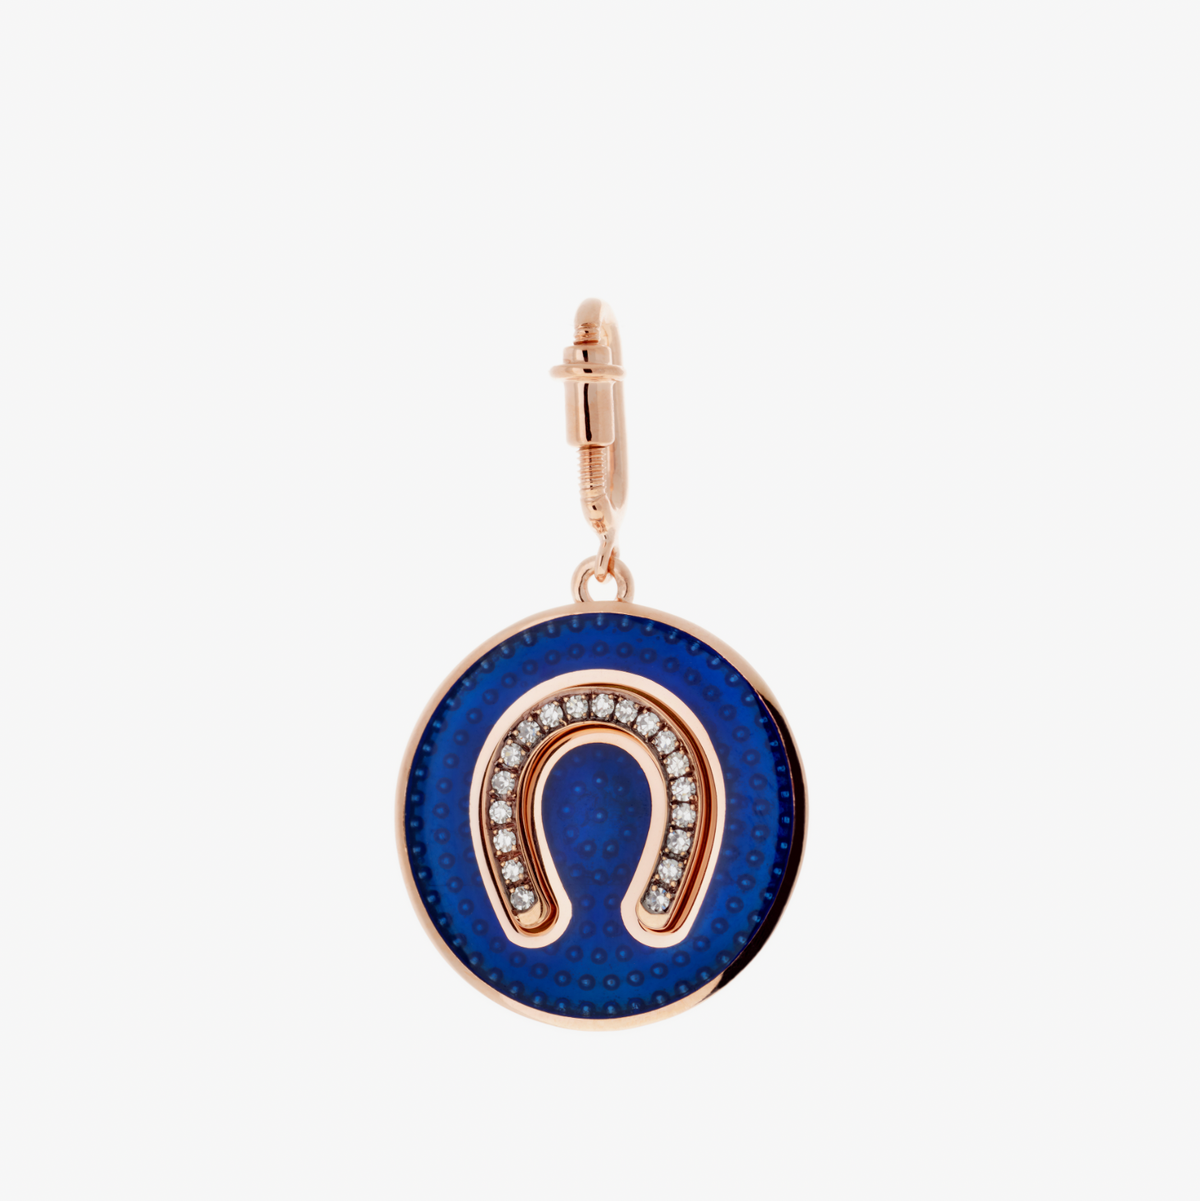 Diamond horseshoe charm in pink gold and blue enamel